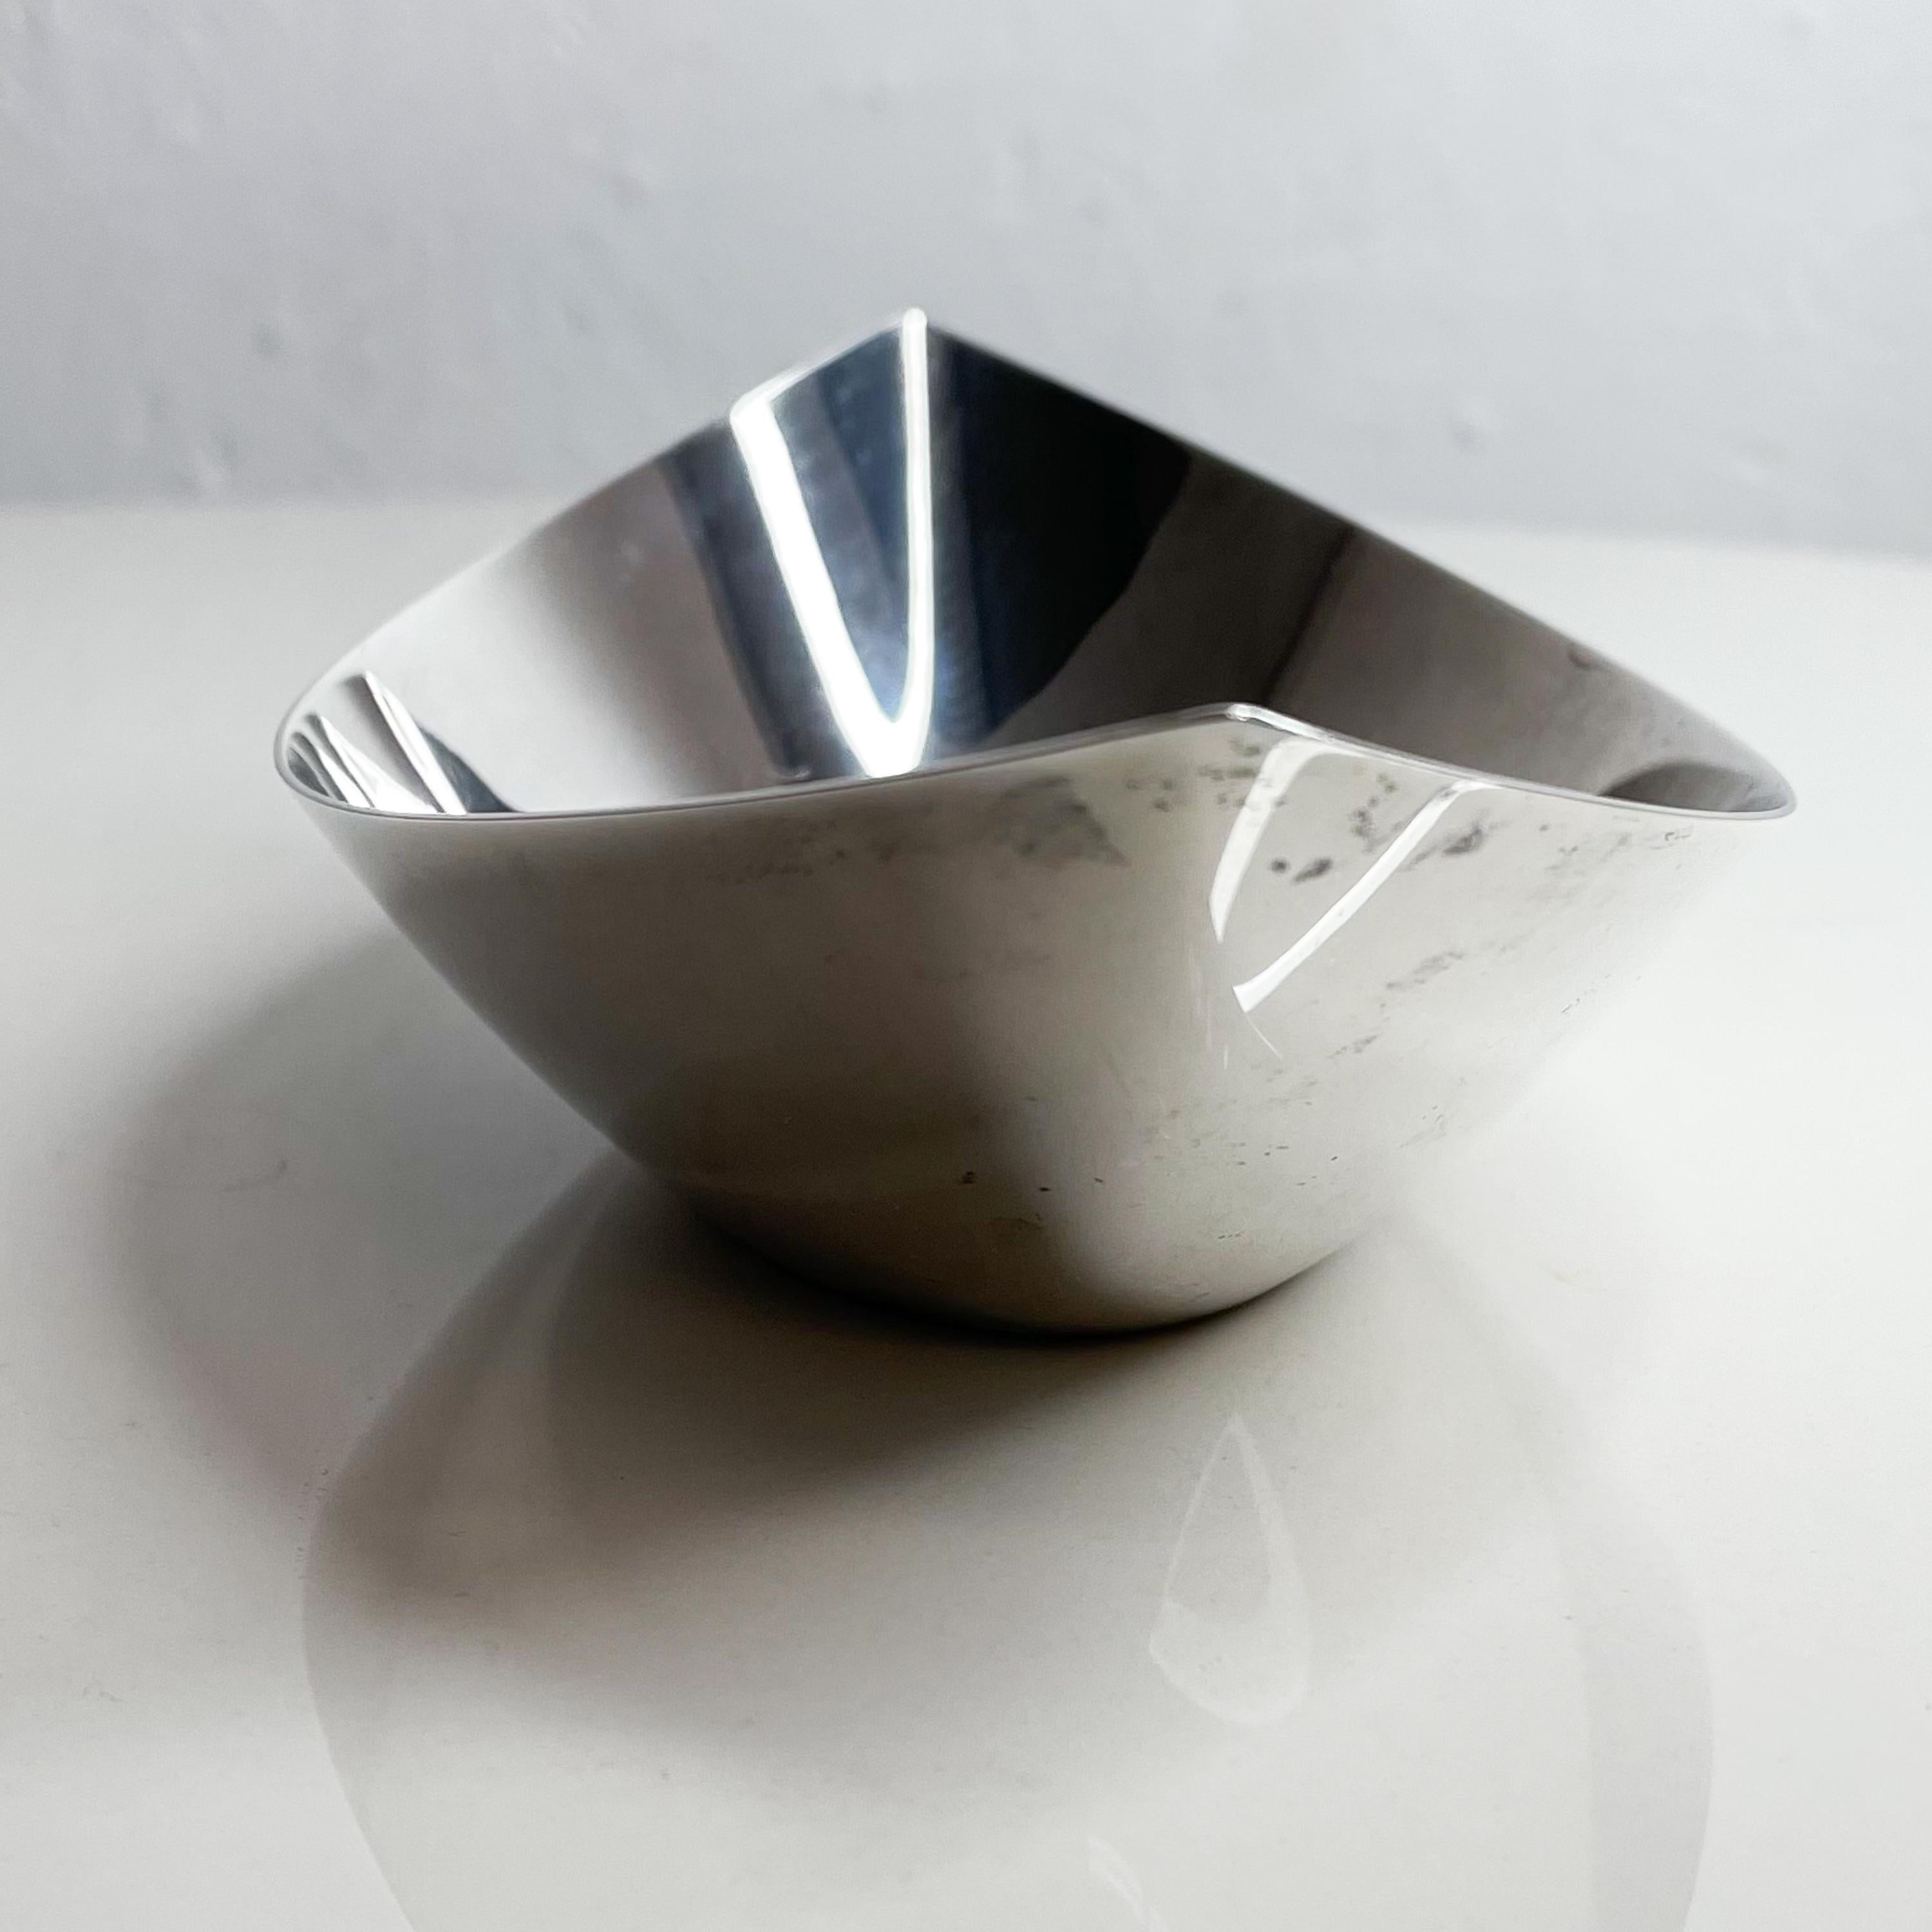 Mid-Century Modern Gorham Silver Plate Serving Dish Oval Canoe Bowl Modern Midcentury Design